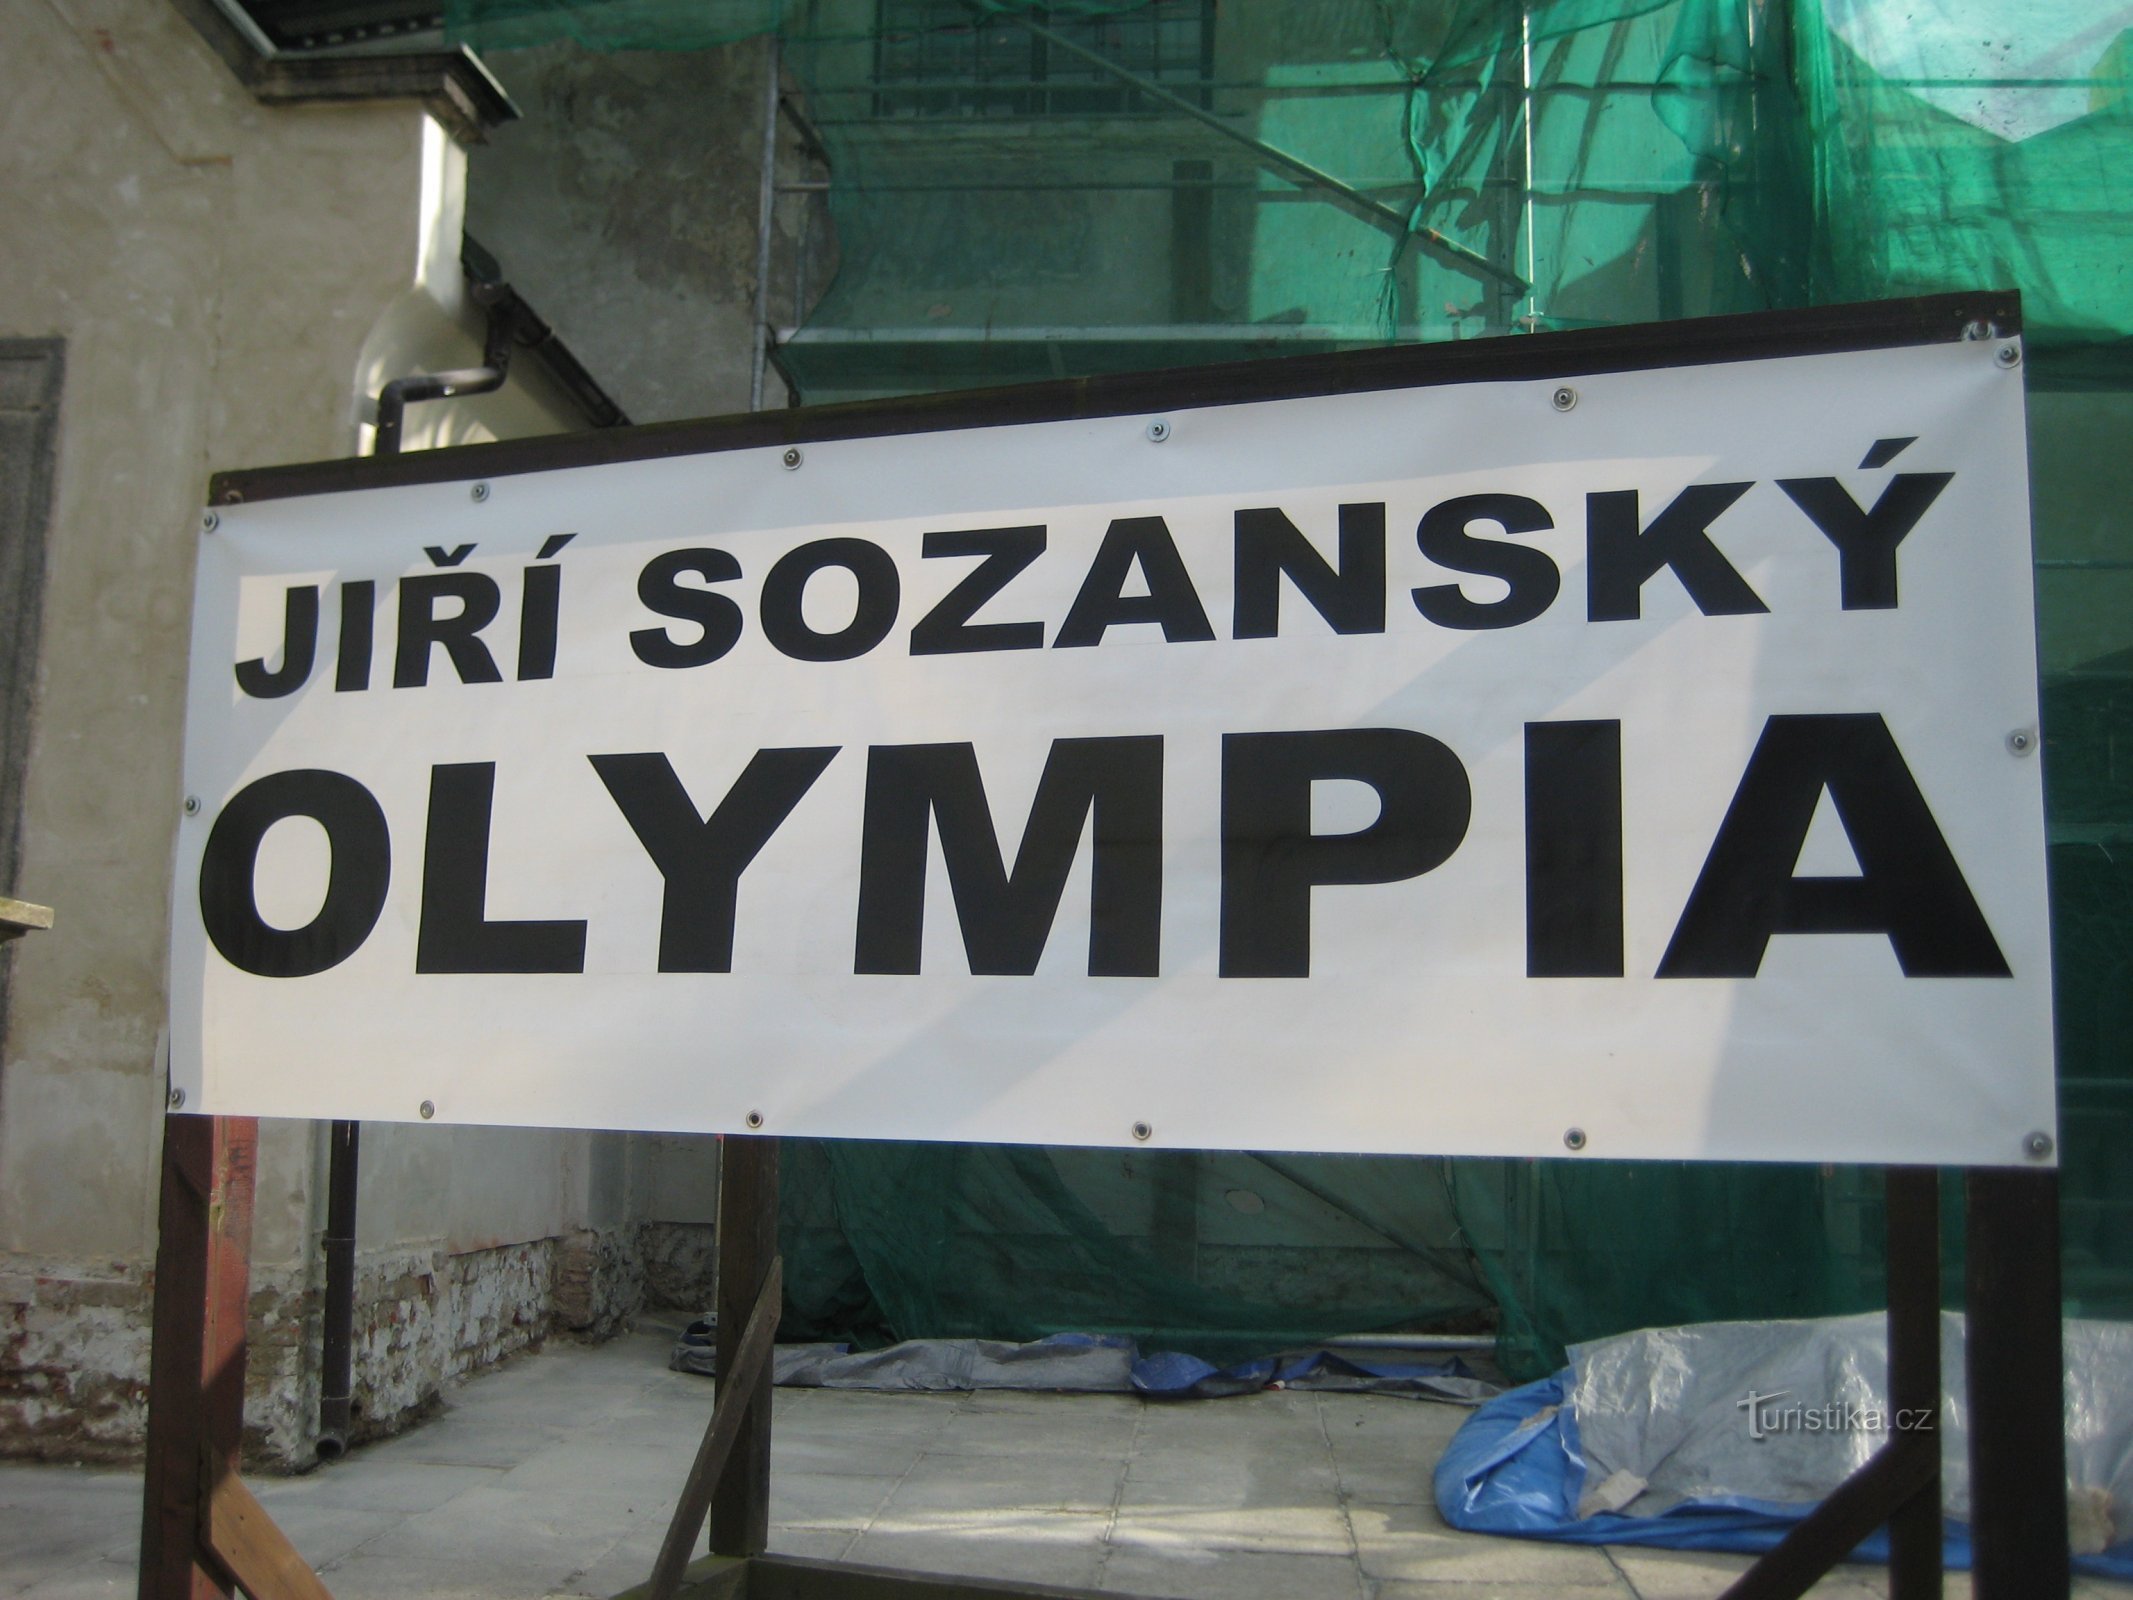 Exhibition Jiří Sozanský - Olympia - Sokolov